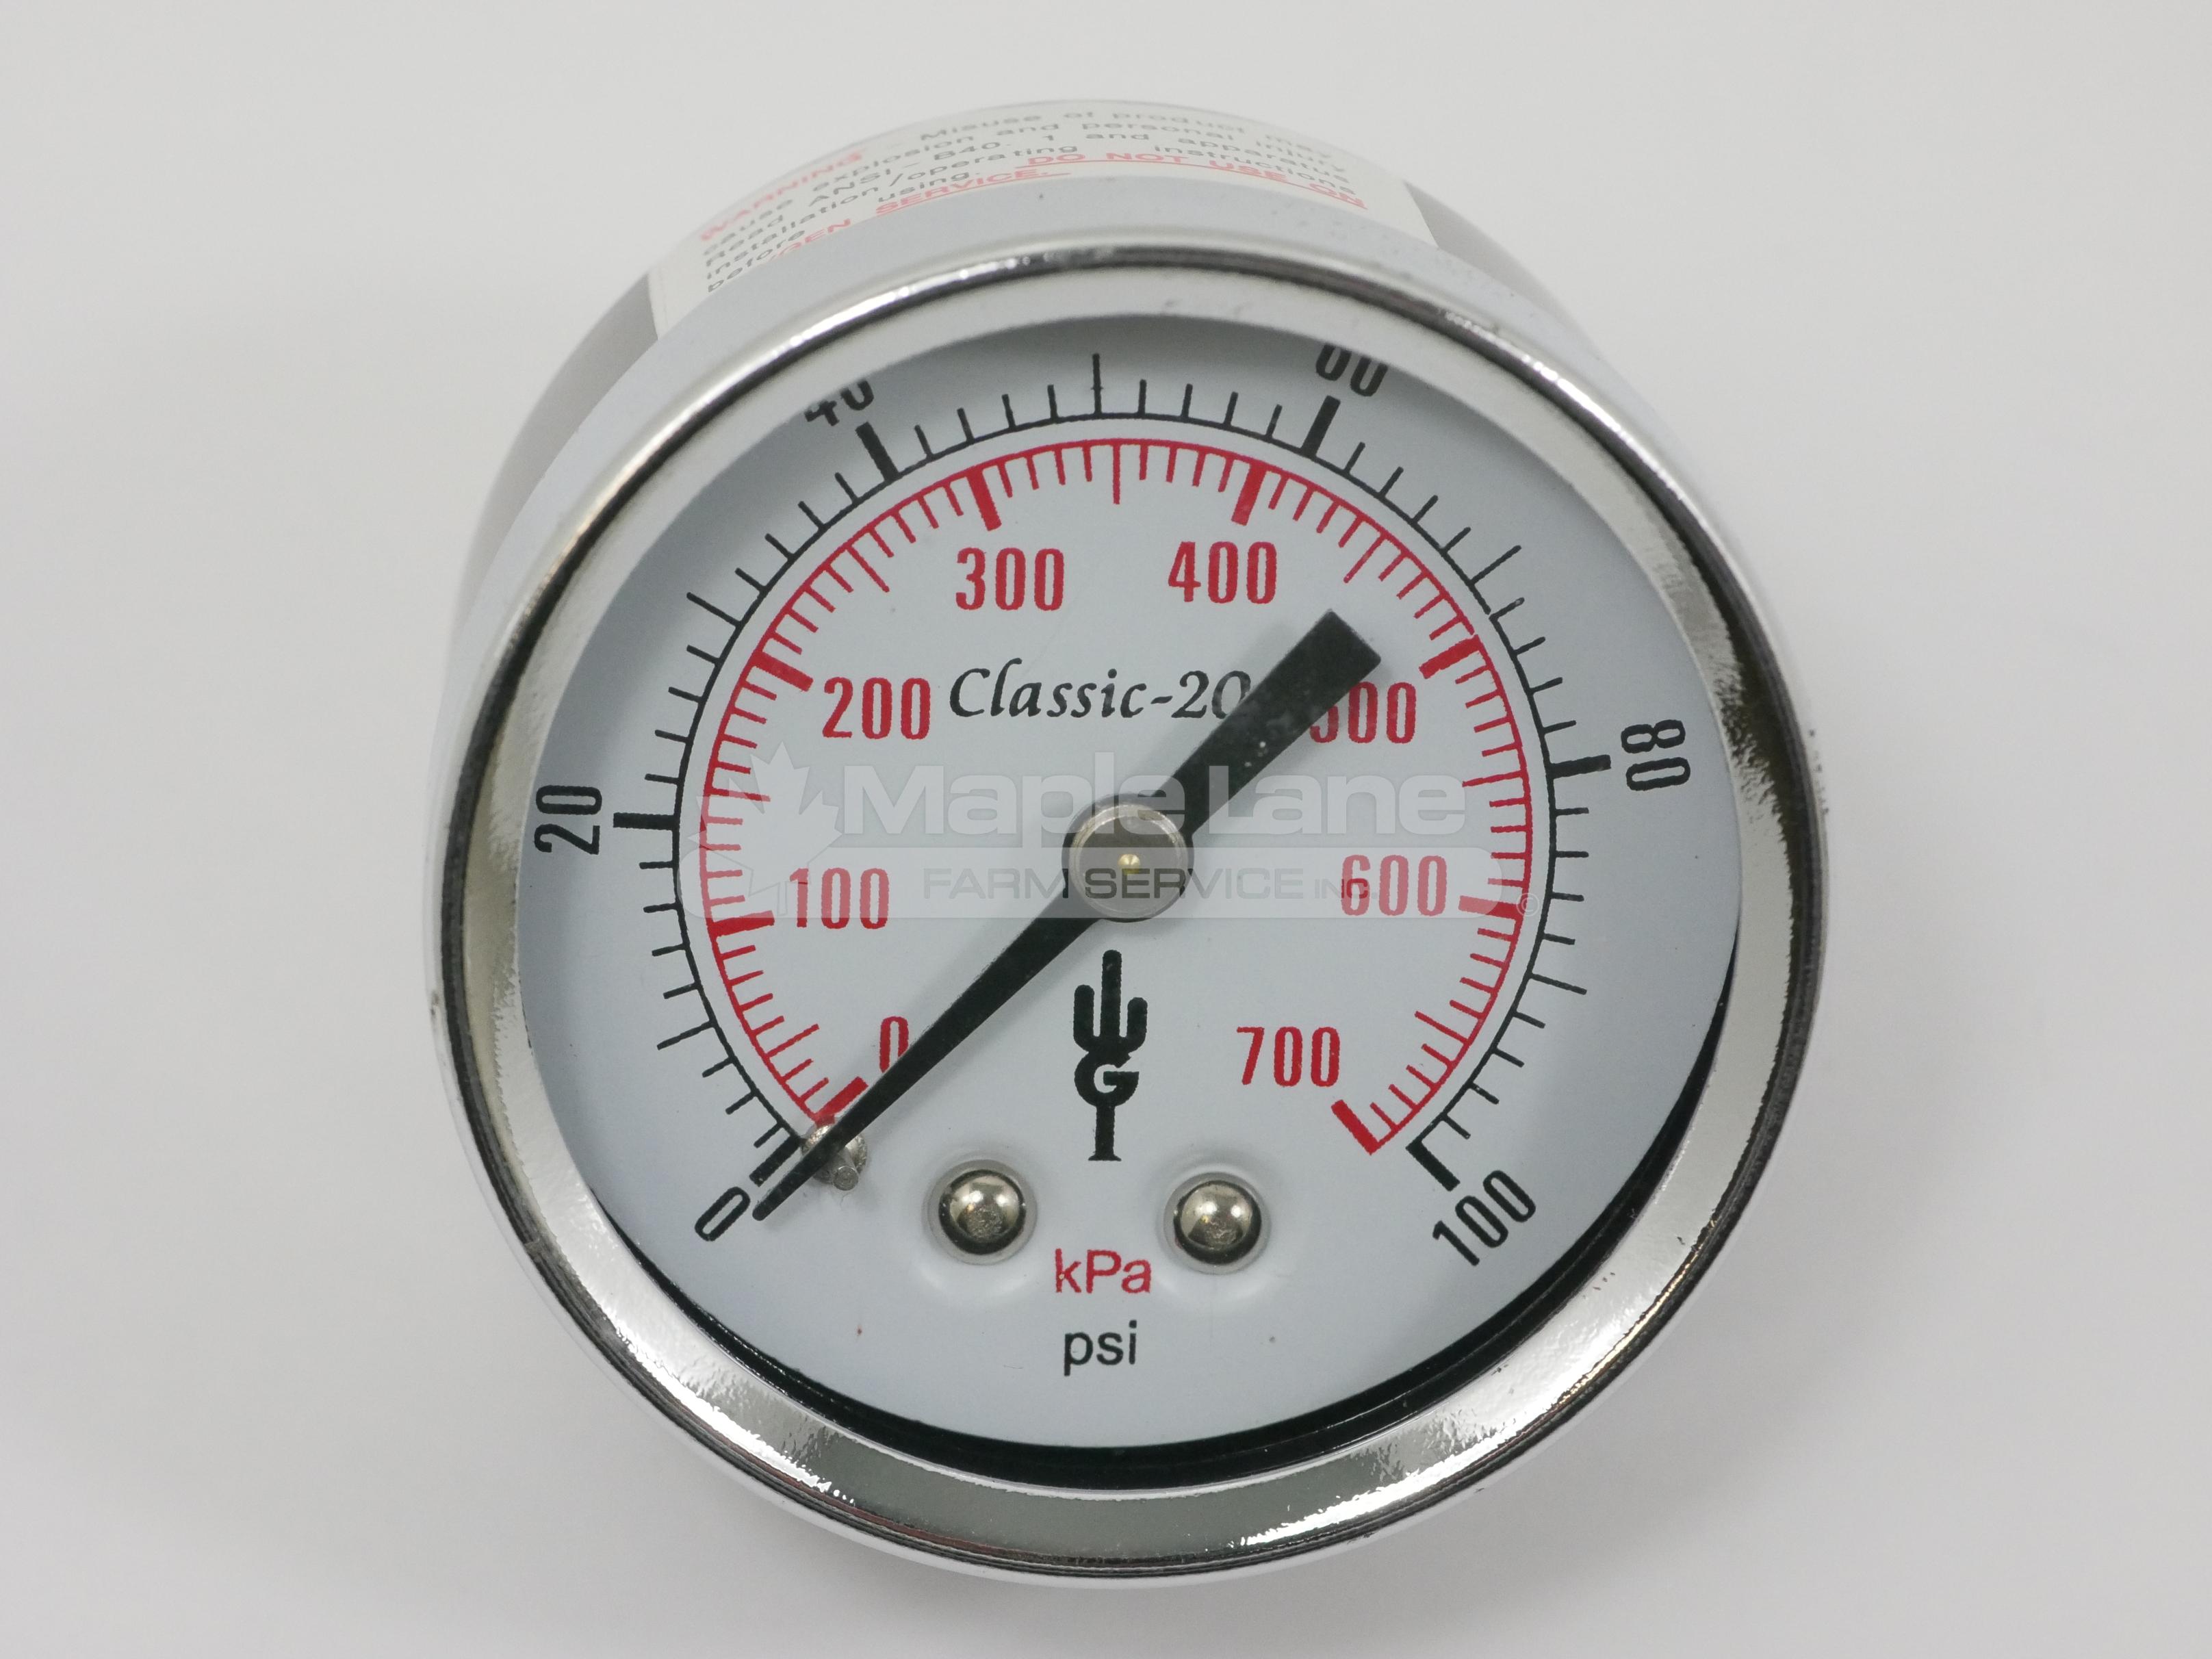 SPPG-10-100 Pressure Gauge 100psi